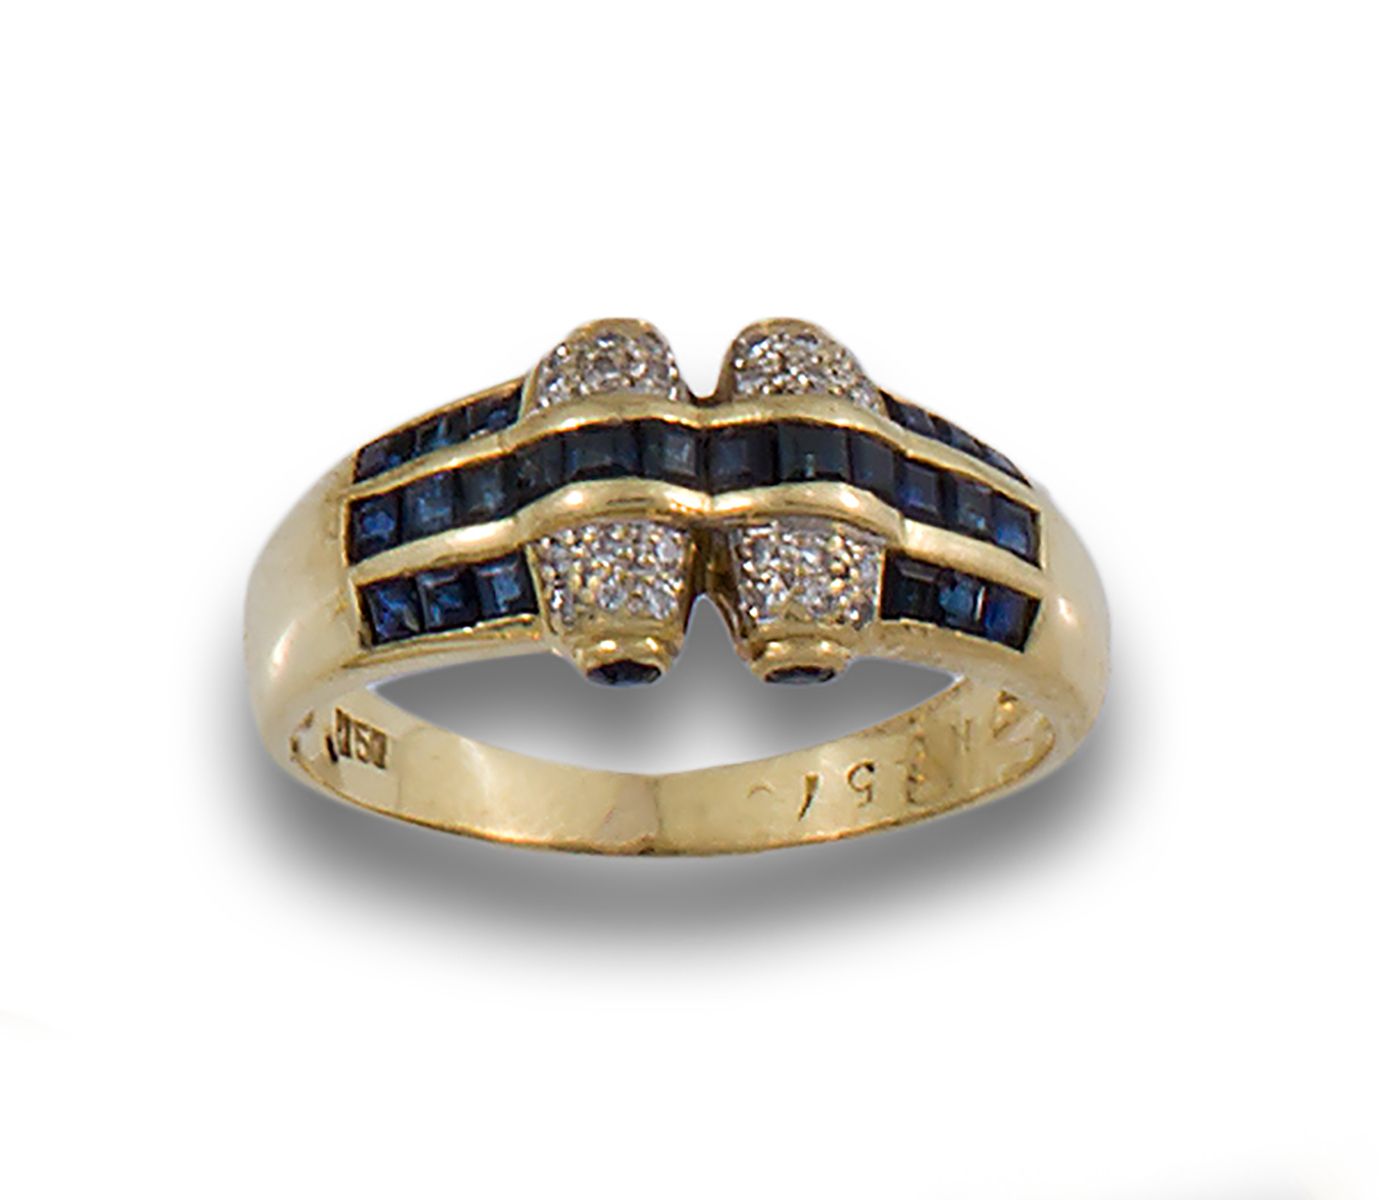 GOLD RING WITH DIAMONDS AND SAPPHIRES 镶嵌明亮式切割钻石和卡莱式切割蓝宝石的18K黄金戒指。.